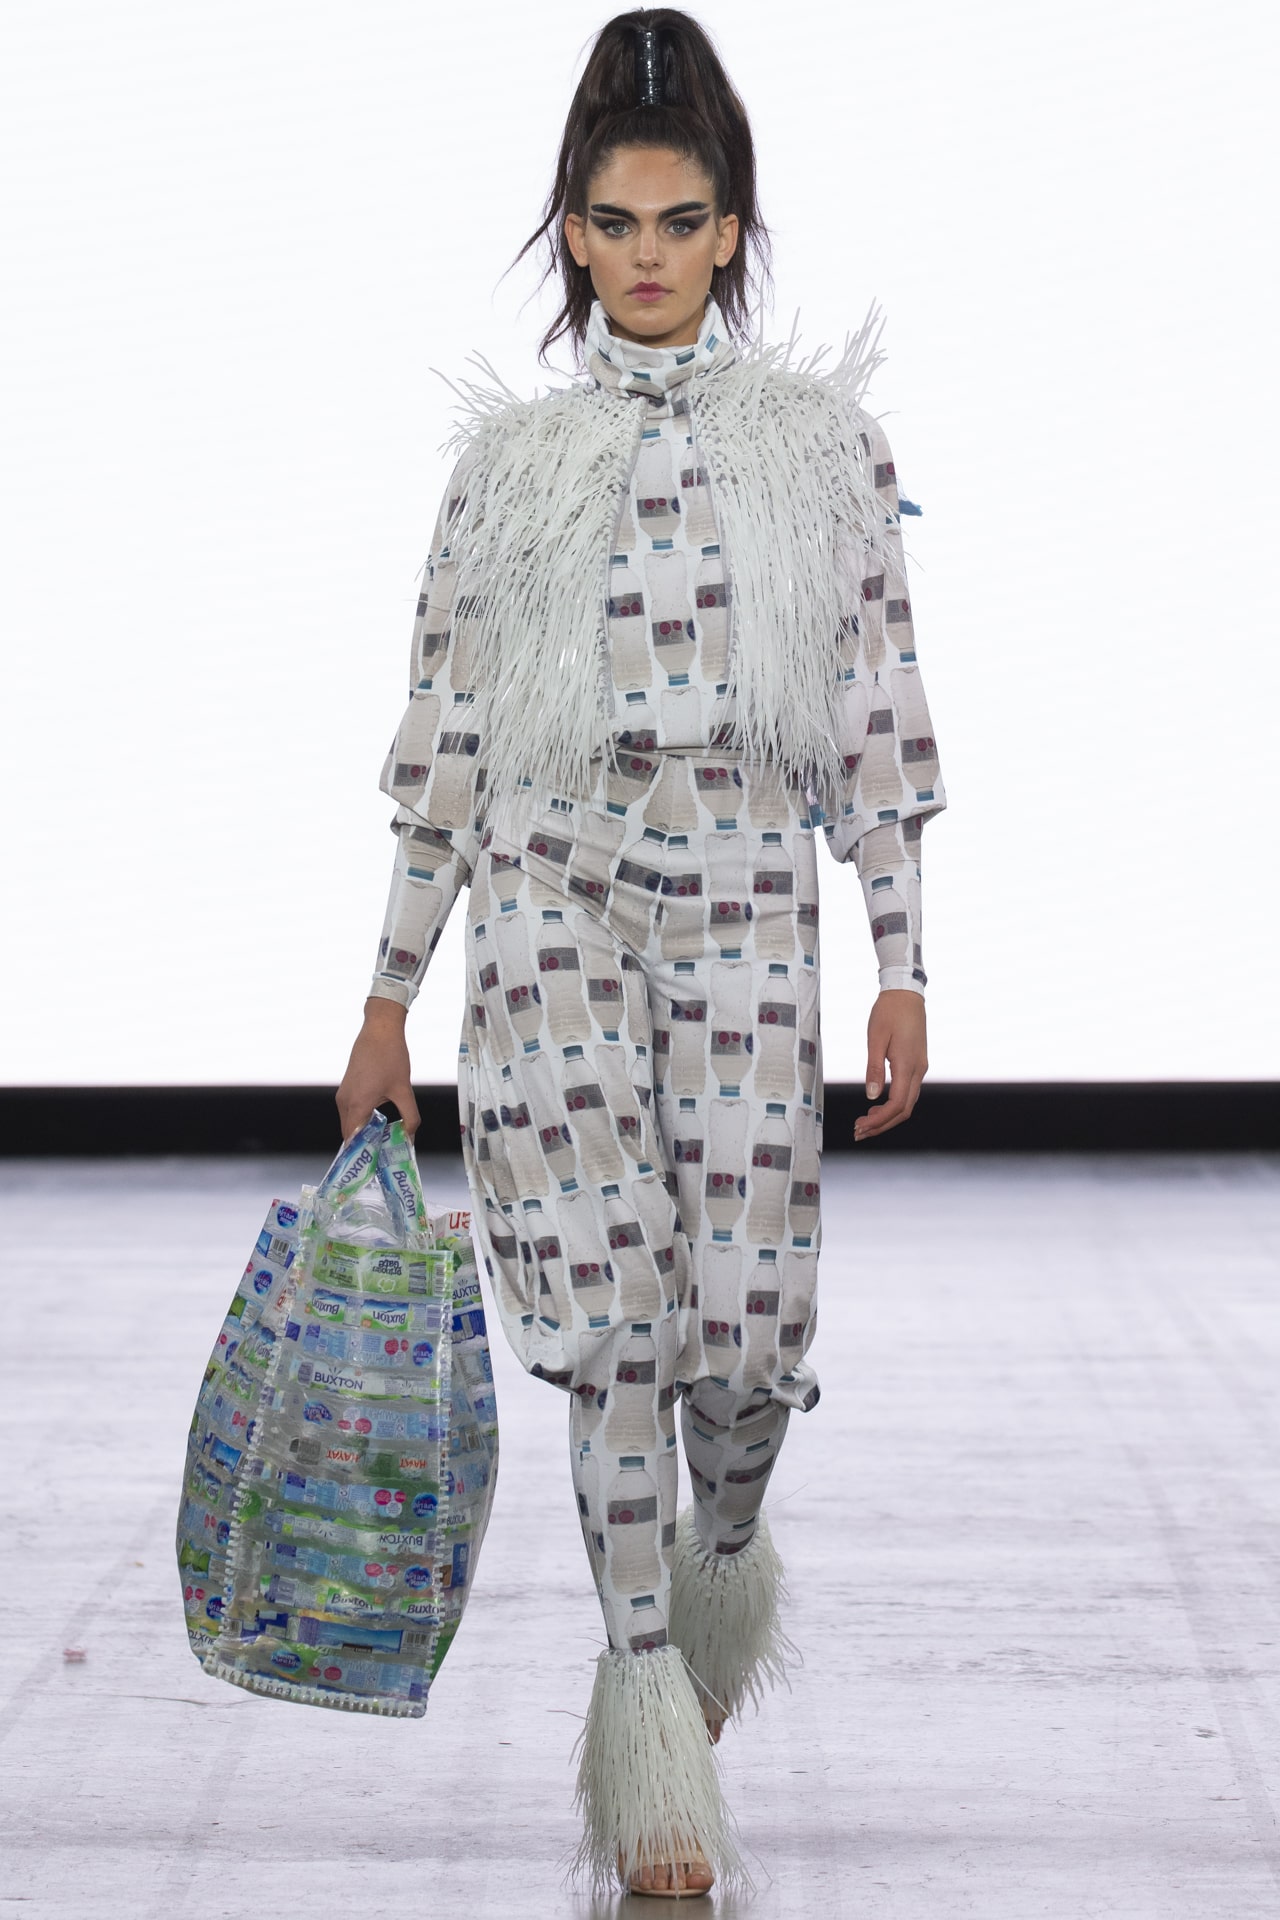 Radka receives praise for plastic bottle fashion collection | UON